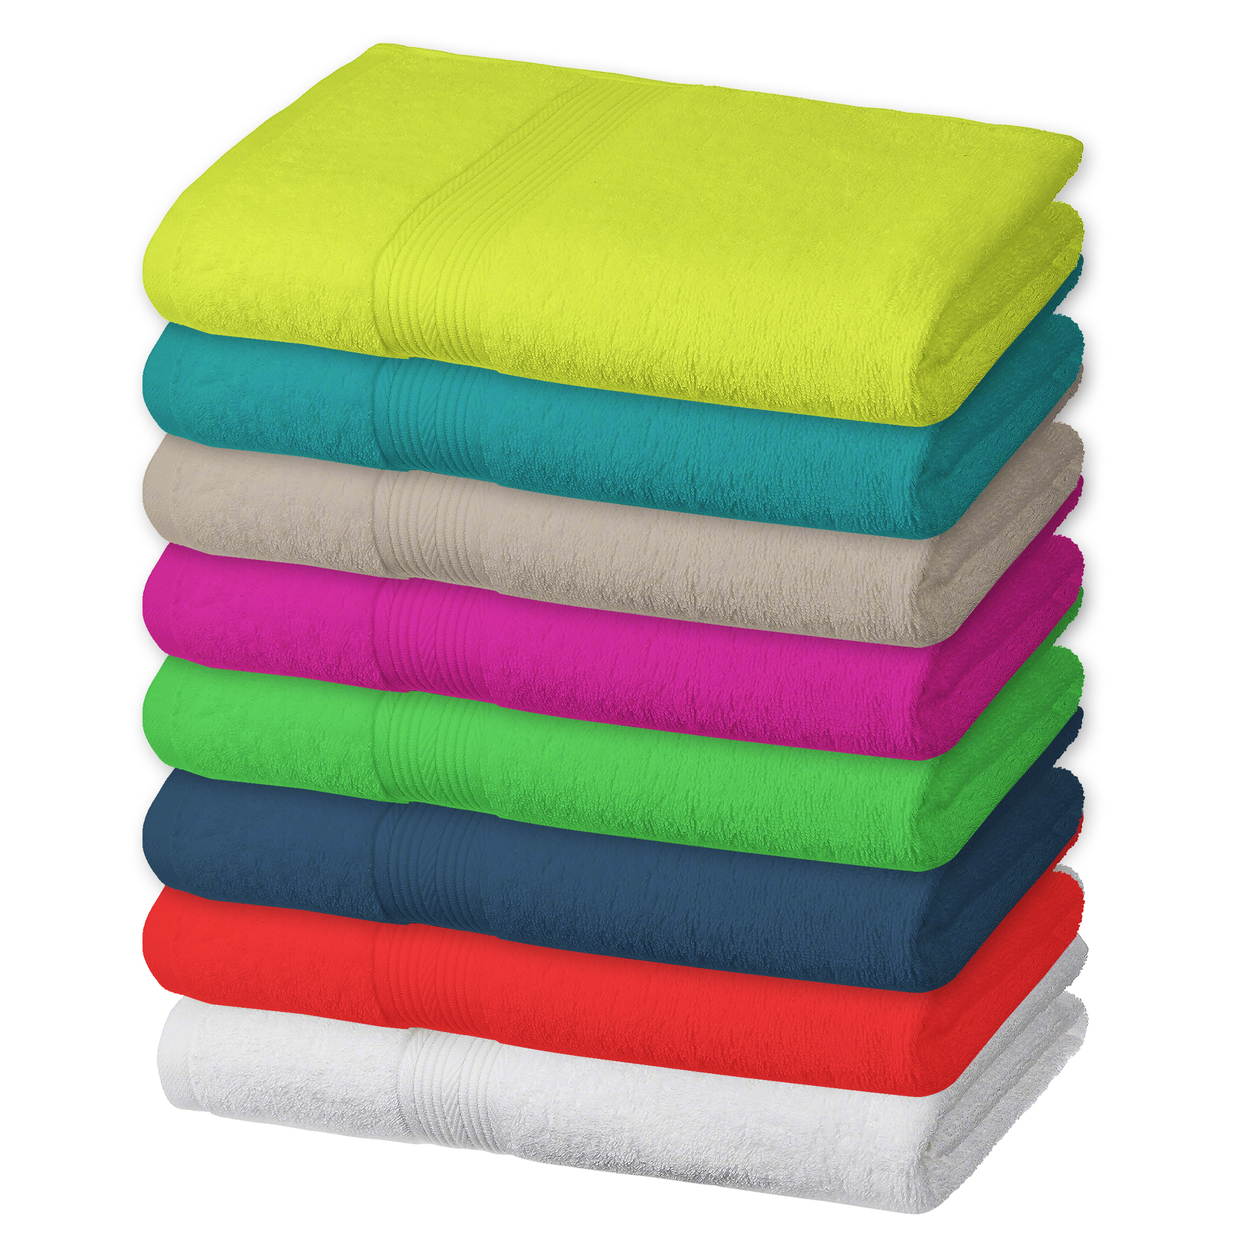 5-Pack: Super Absorbent 100% Cotton 54 X 27 Hotel Beach Bath Towels - Neutral